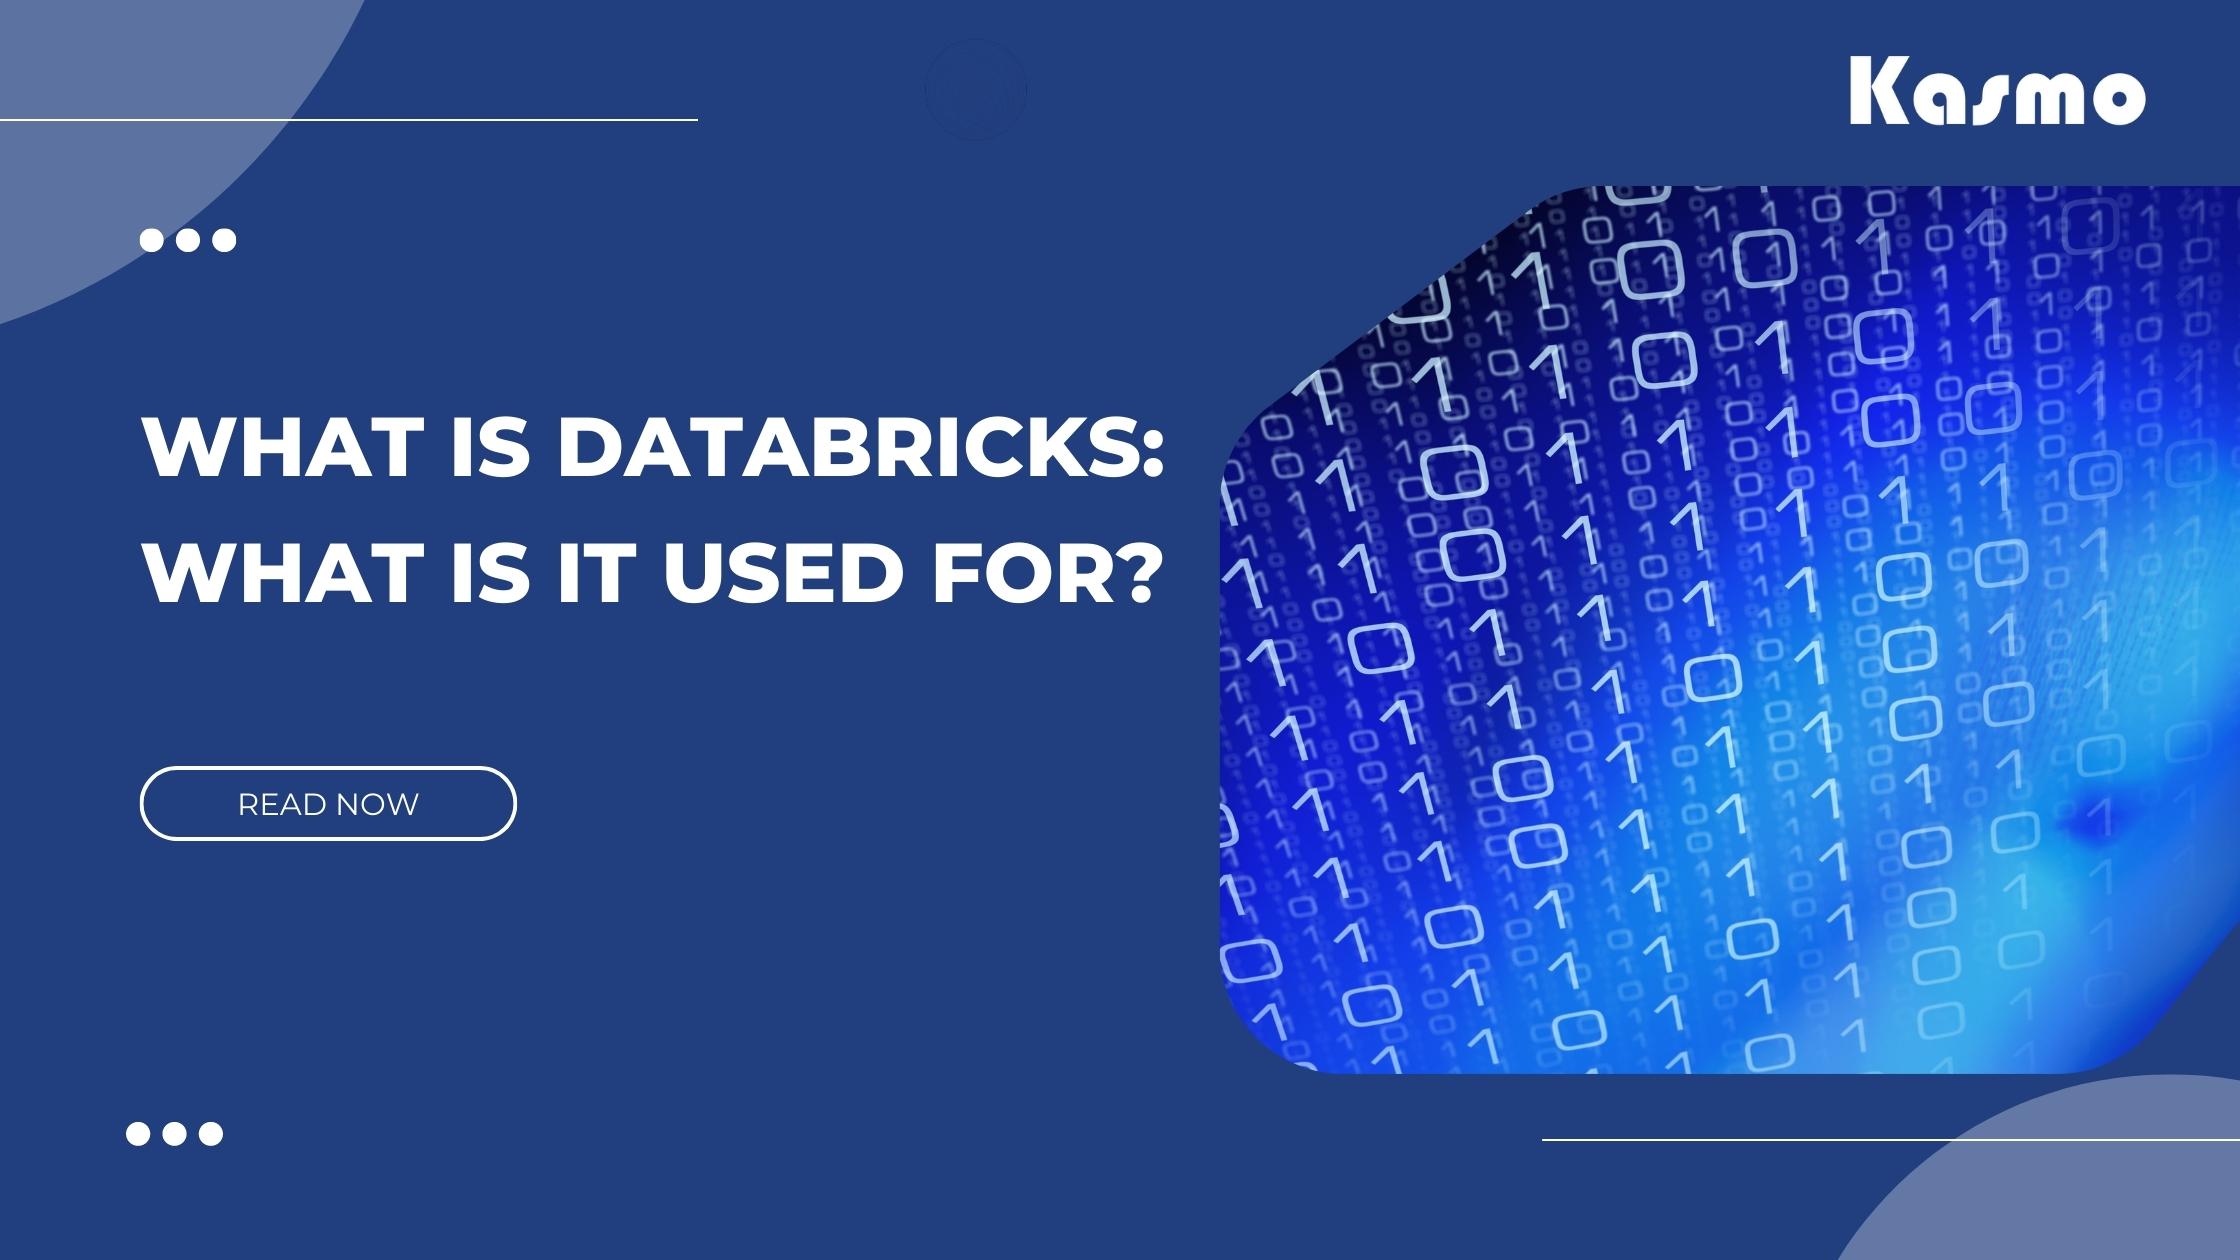 What is Data bricks